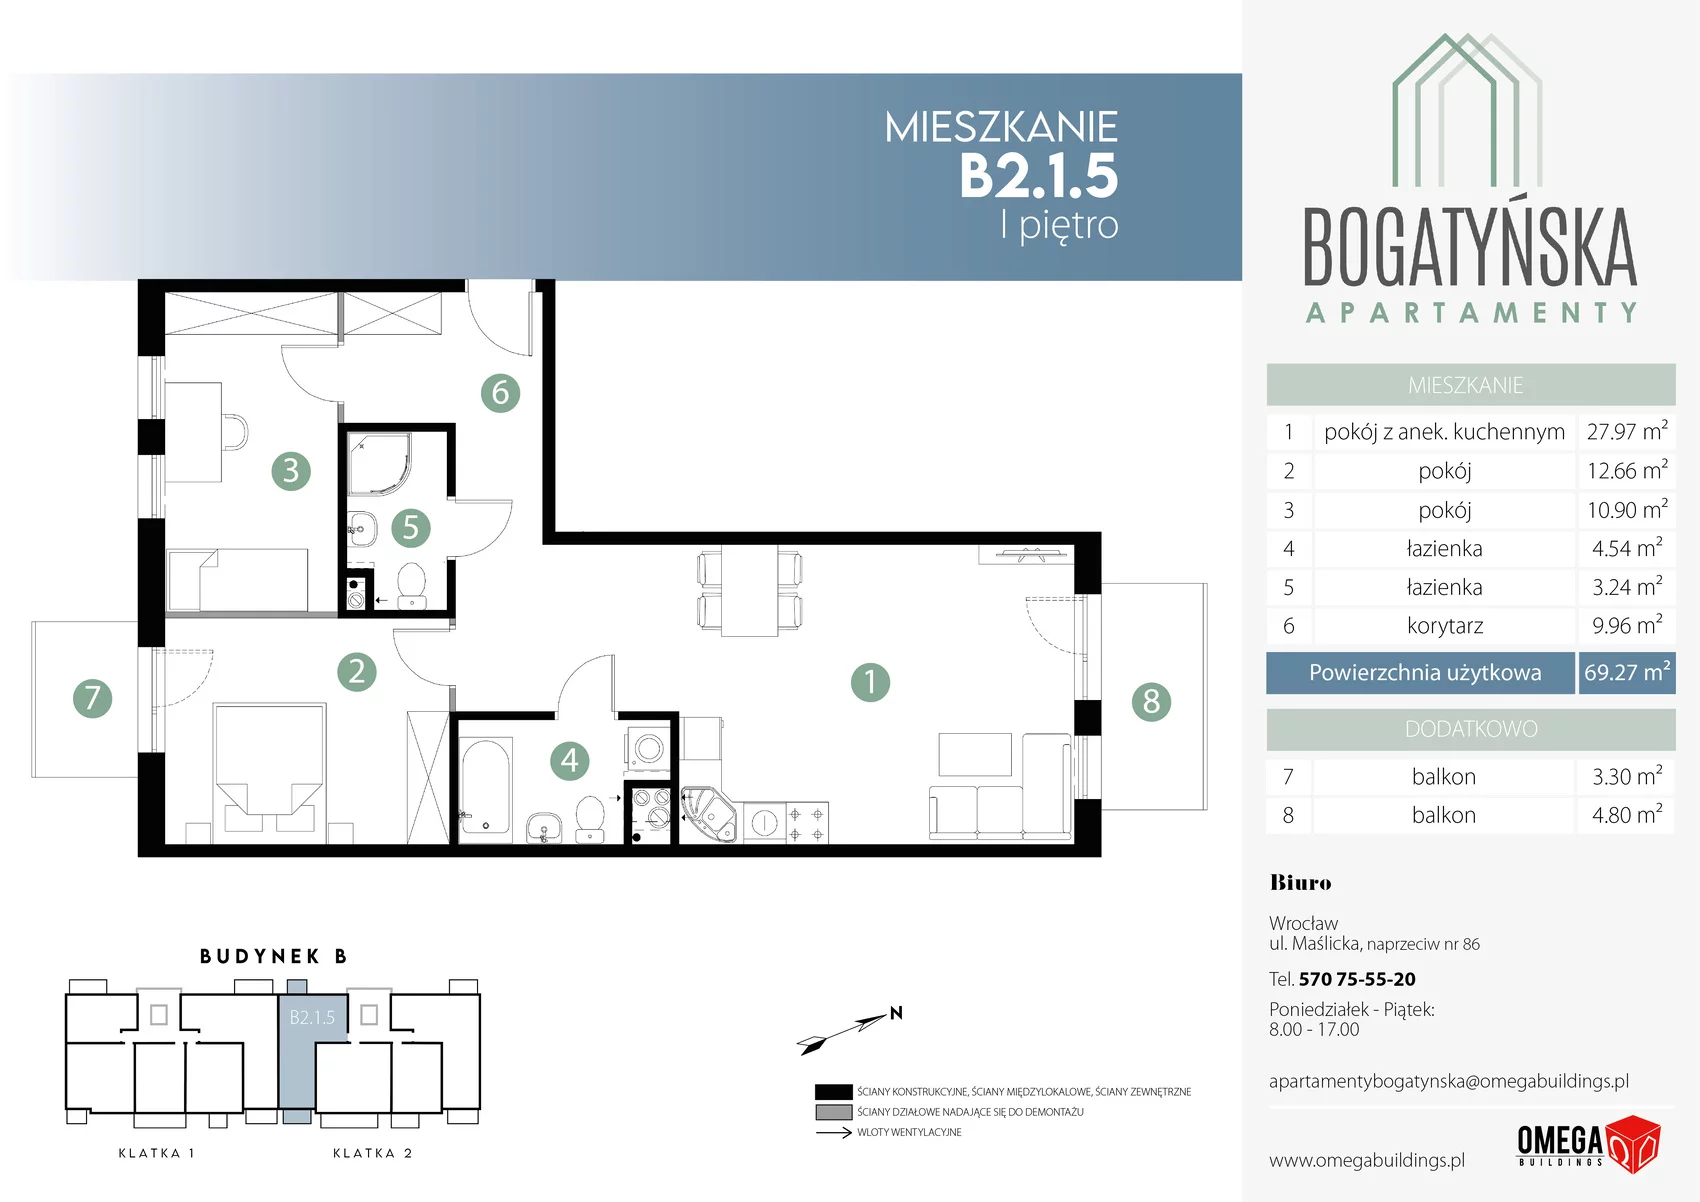 Apartament 69,27 m², piętro 1, oferta nr B2.1.5, Bogatyńska Apartamenty, Wrocław, Maślice, Fabryczna, ul. Bogatyńska